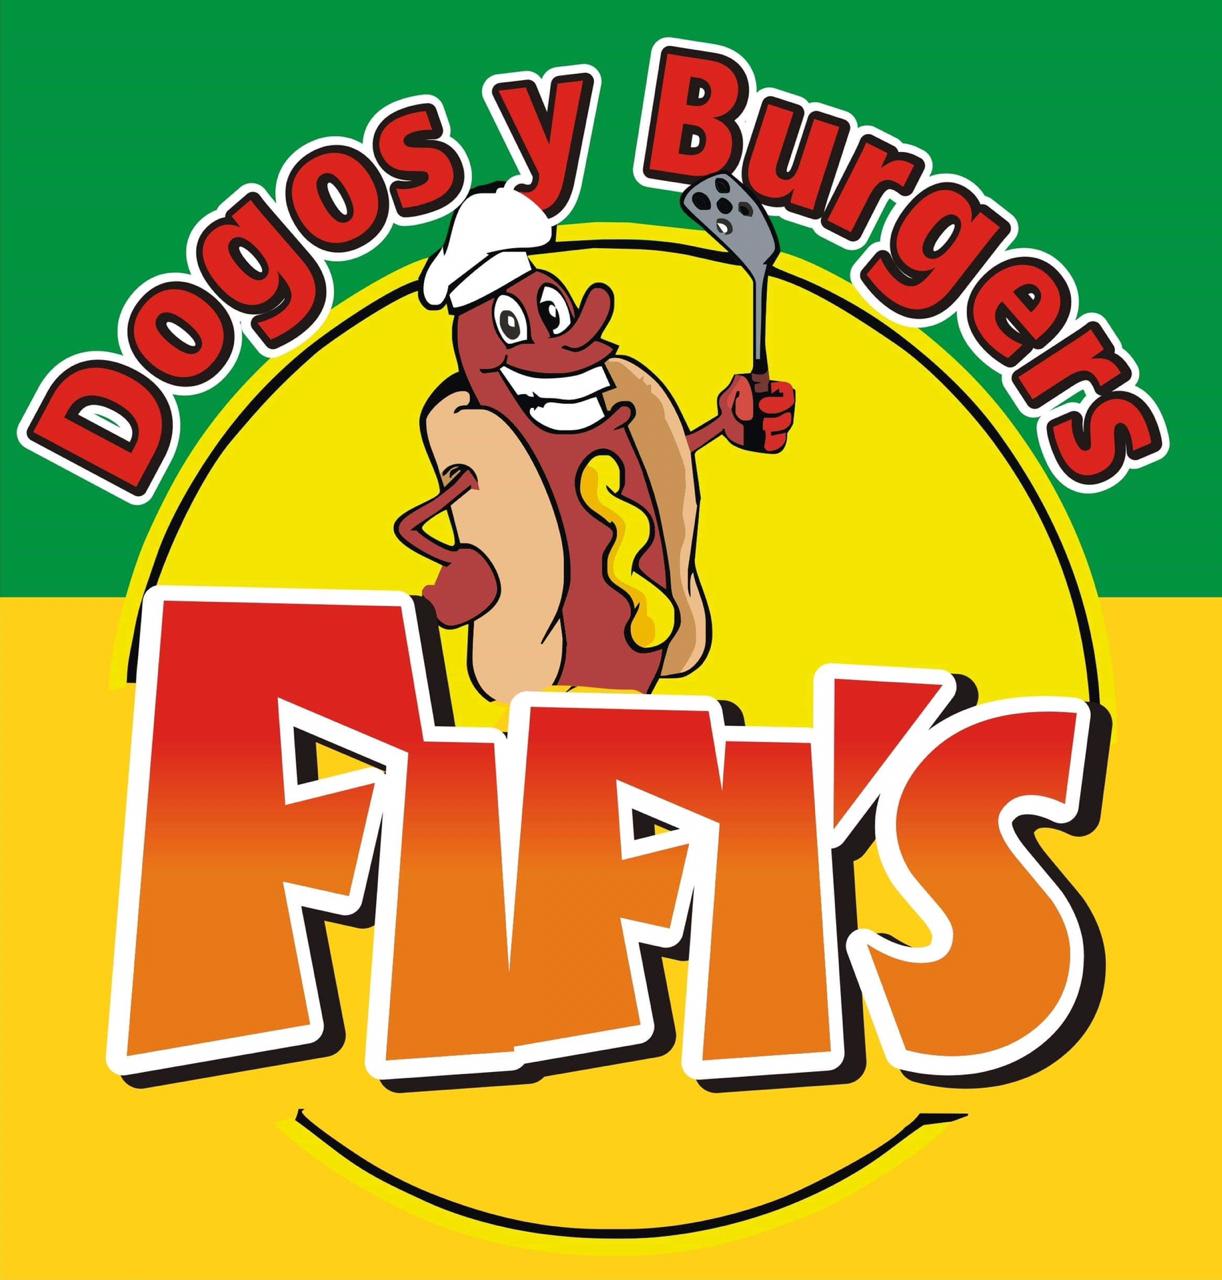 Dogos y Burguers Fifi's